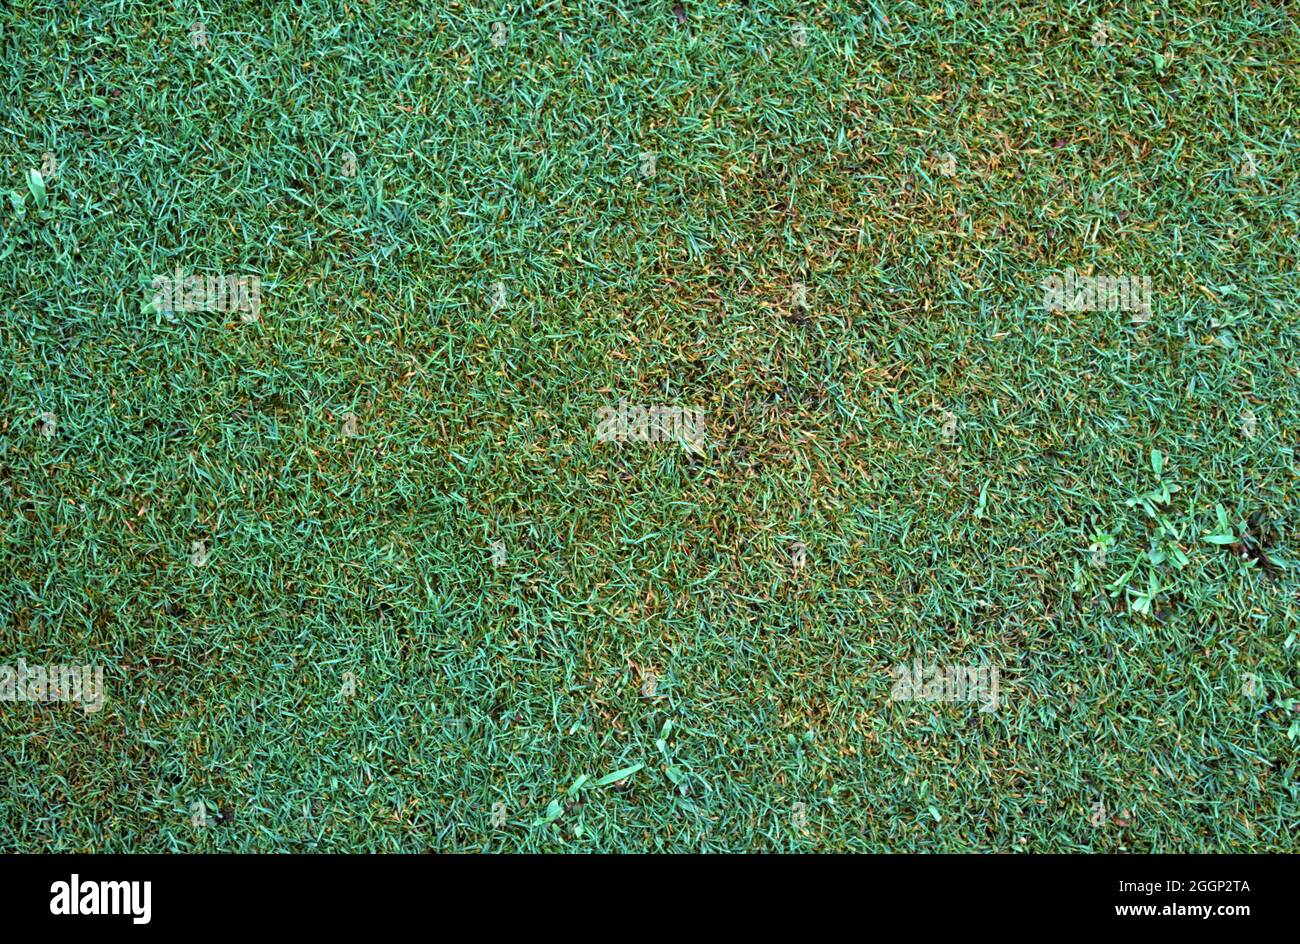 Rhizoctonia Brown Patch (Rhizoctonia solani) Pilzkrankheit infizierten Bereich in der Nähe gemäht kurzen Golf grünen Turfgras, USA Stockfoto